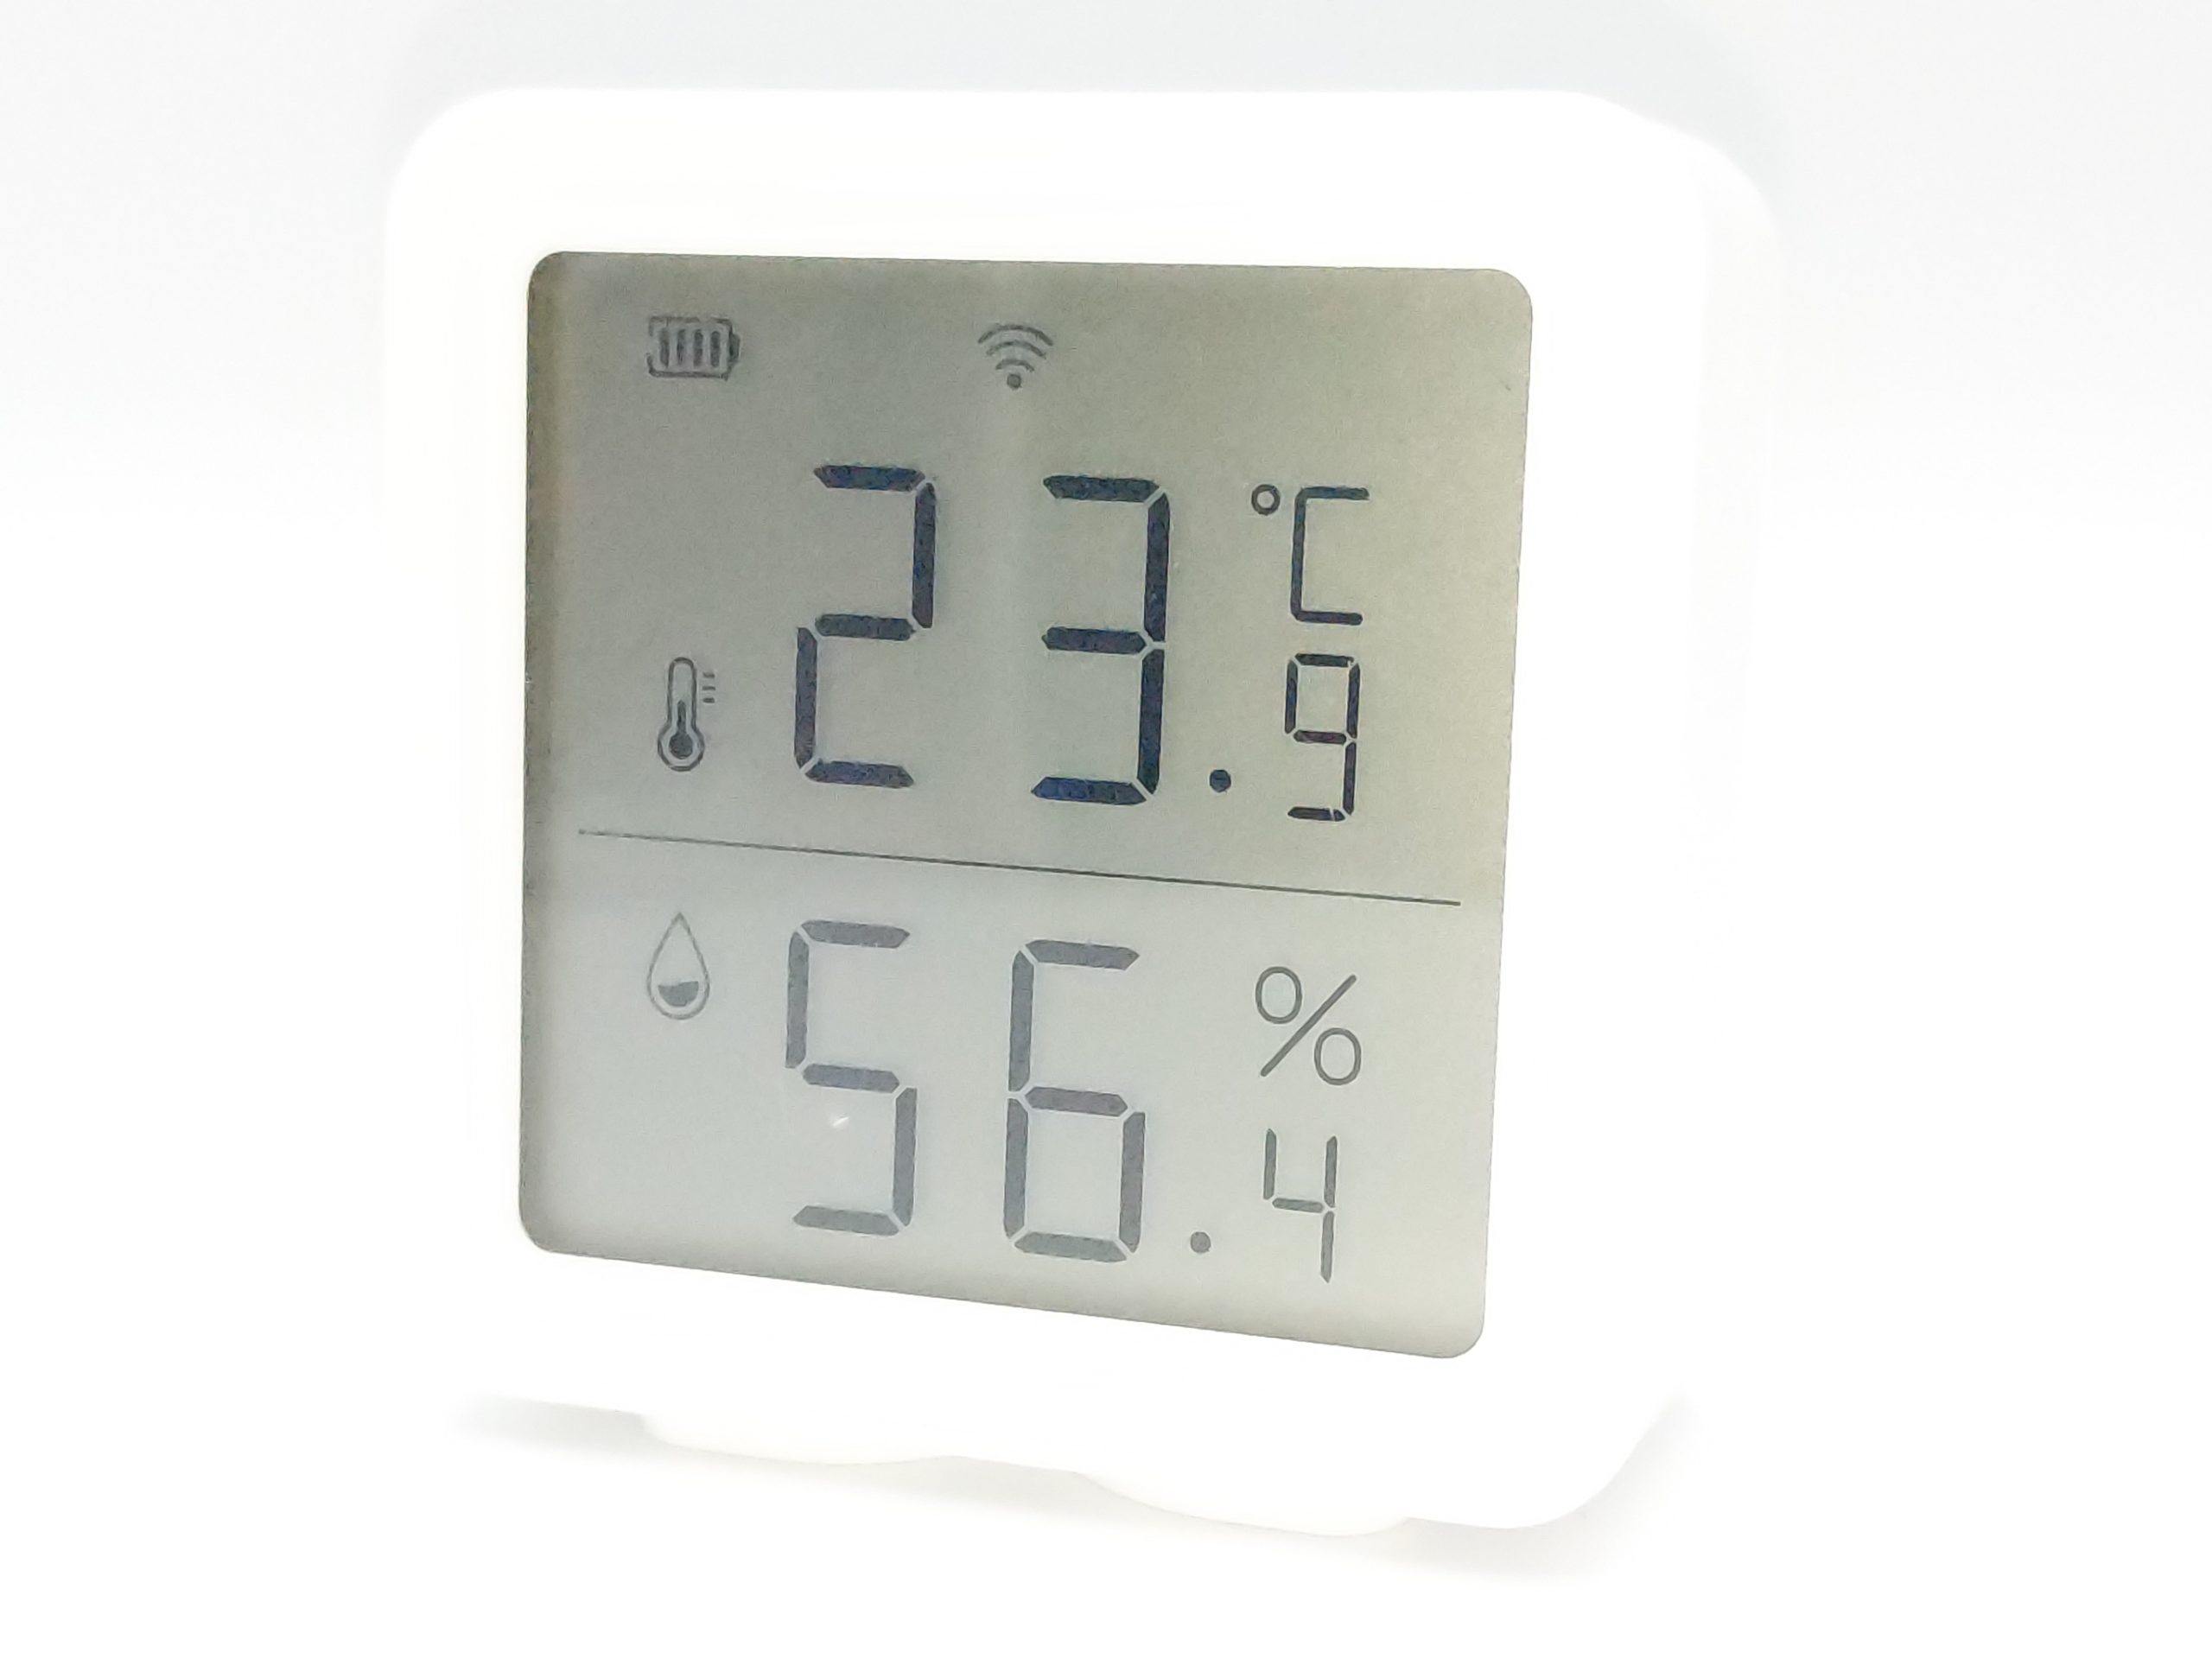  WiFi Room Thermometer Hygrometer, Kecheer Smart